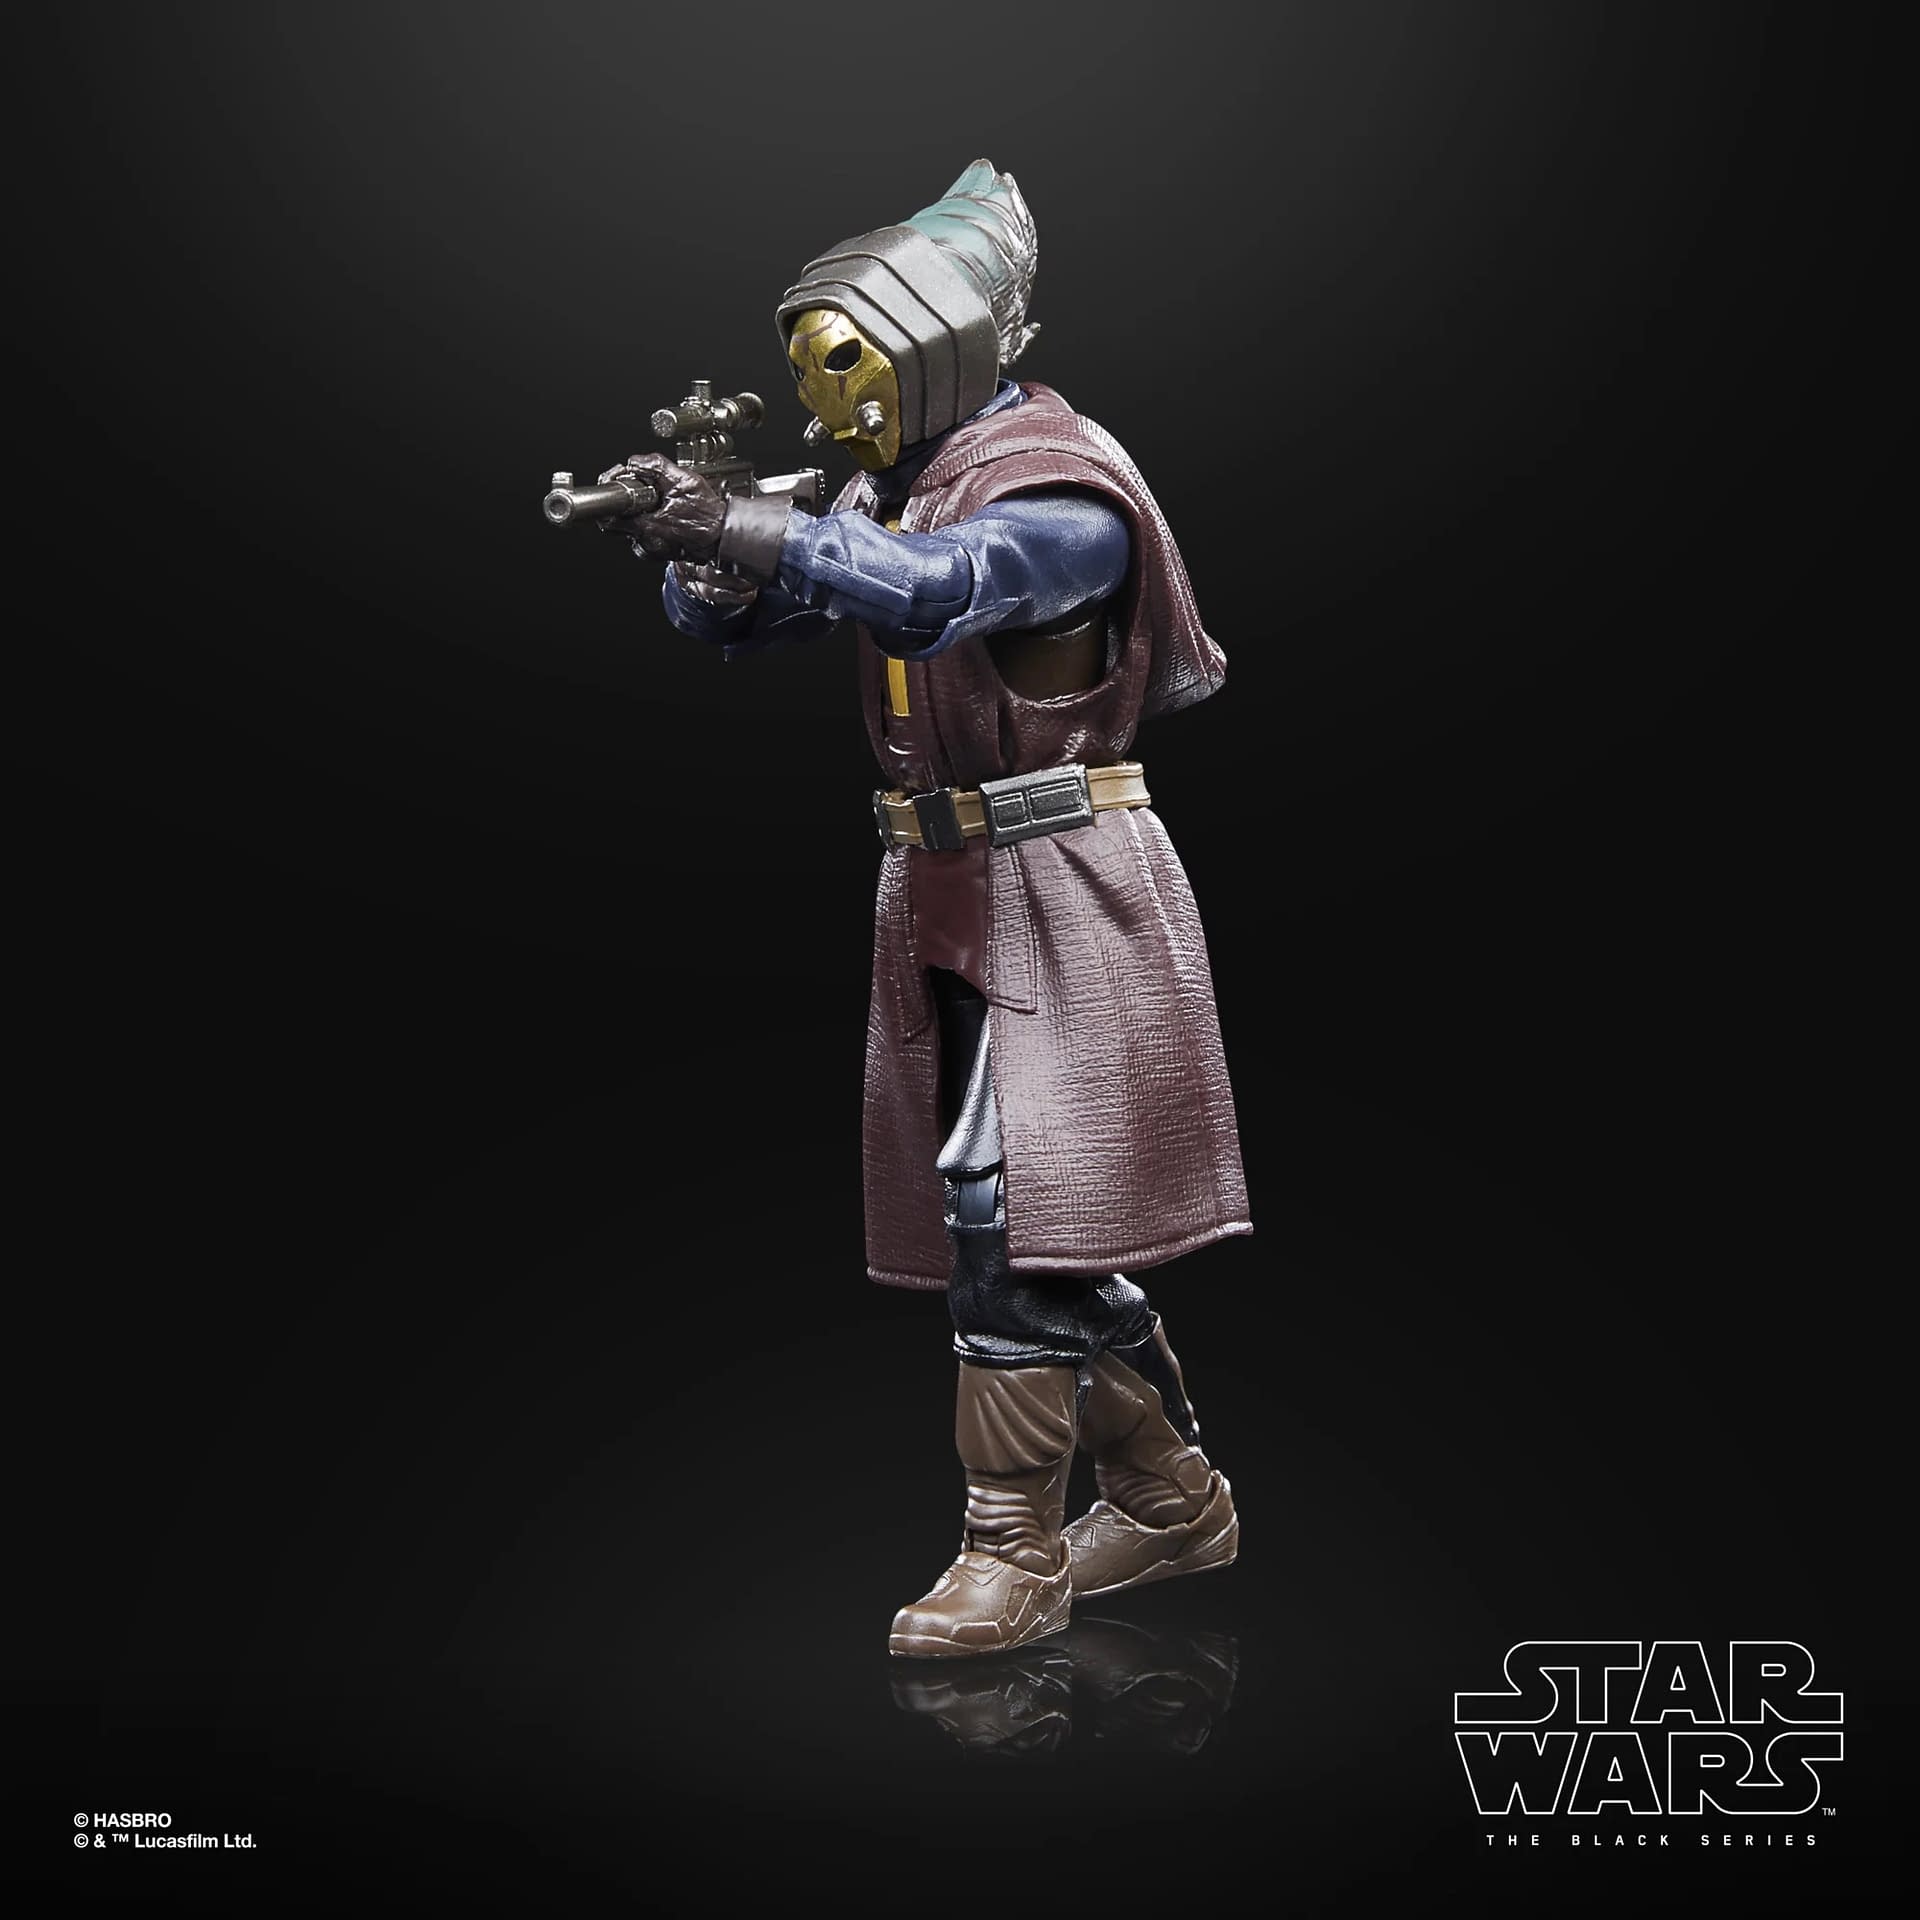 Hasbro Reveals Star Wars: The Book of Boba Fett Pyke Soldier Figure